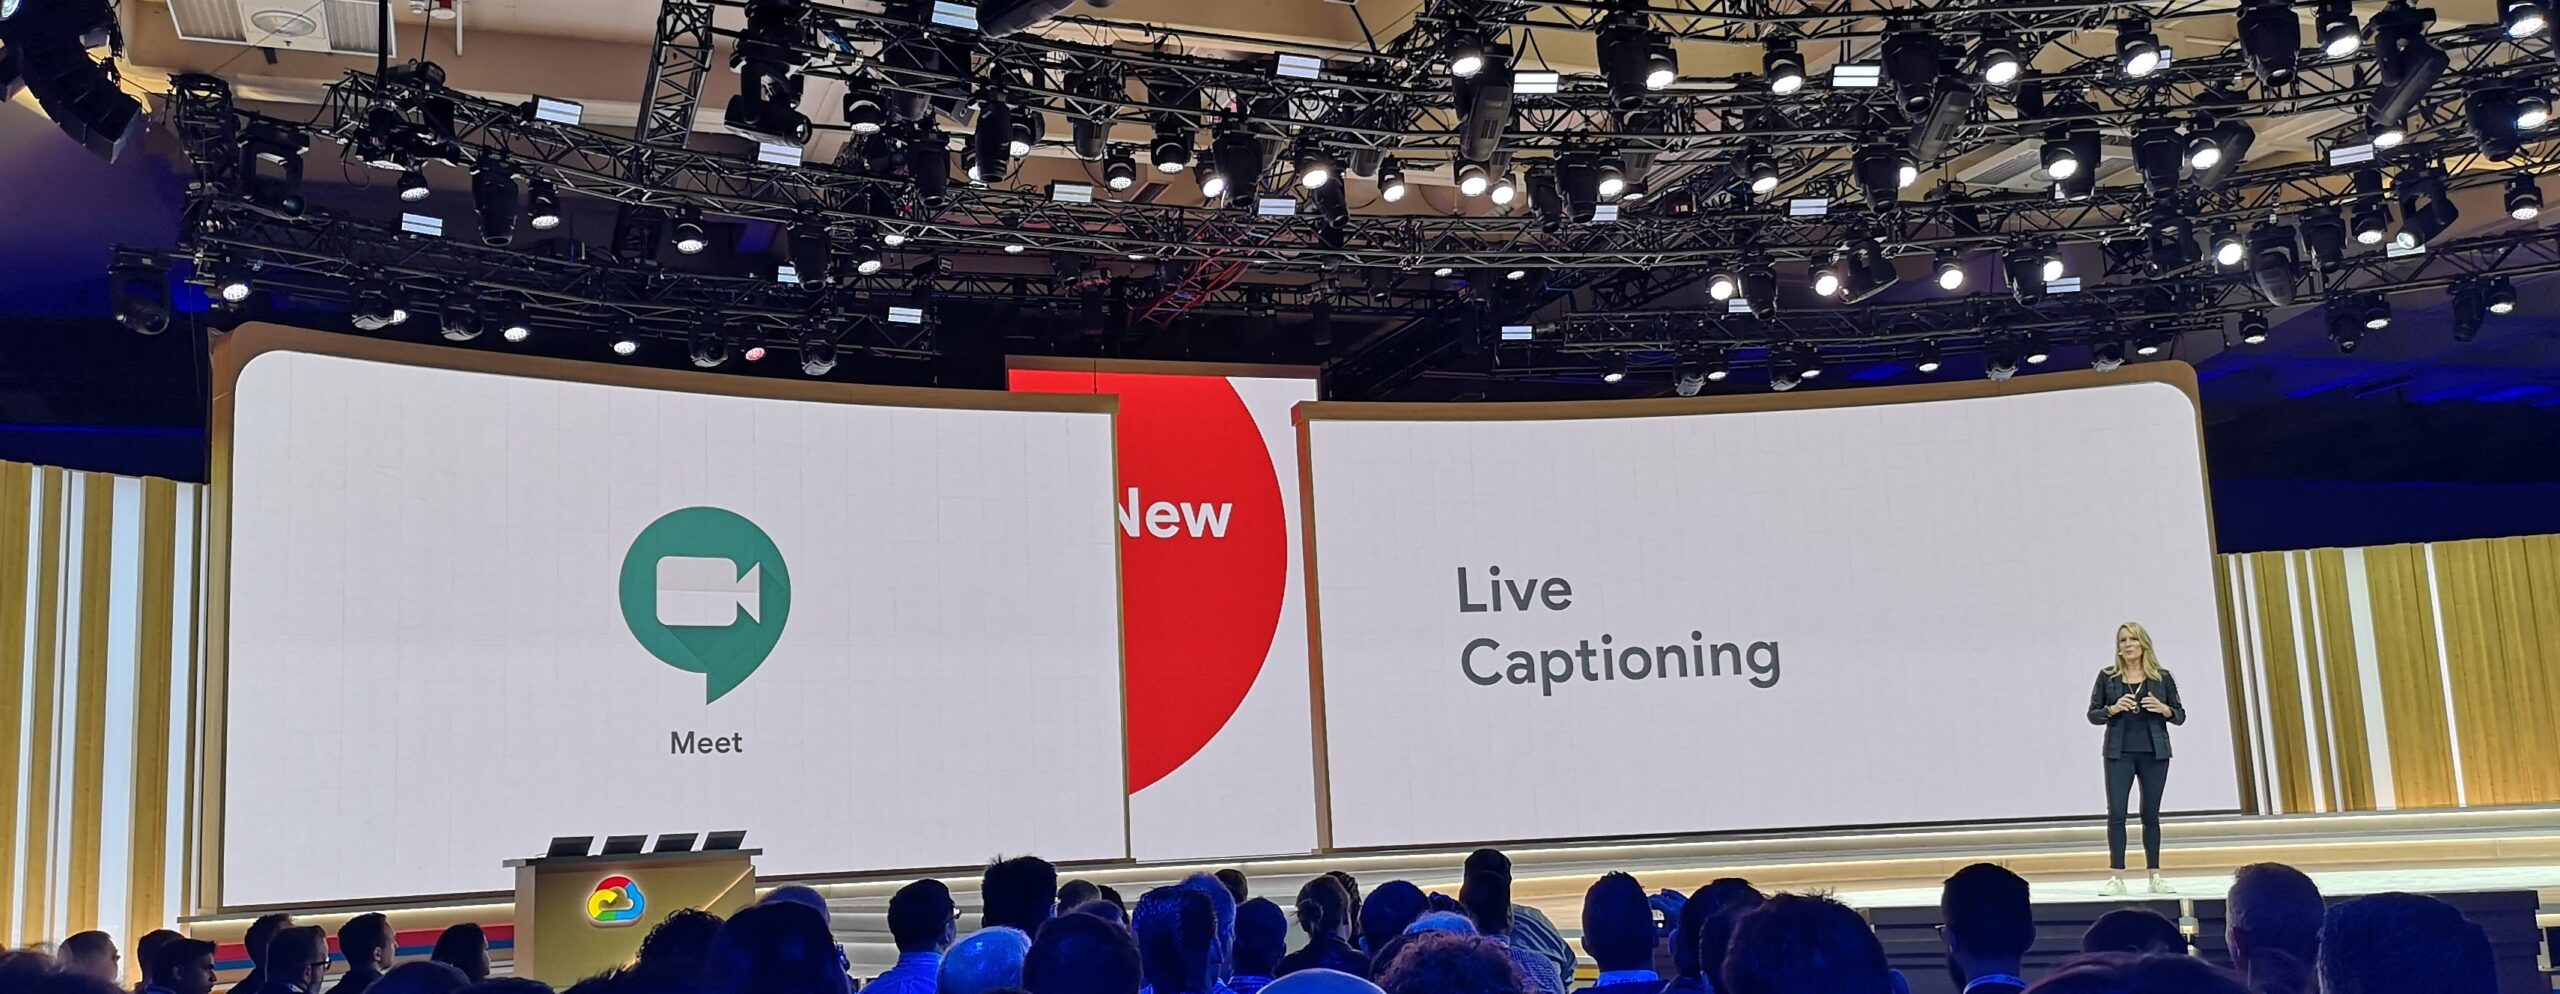 Google Next '19 live captioning announced